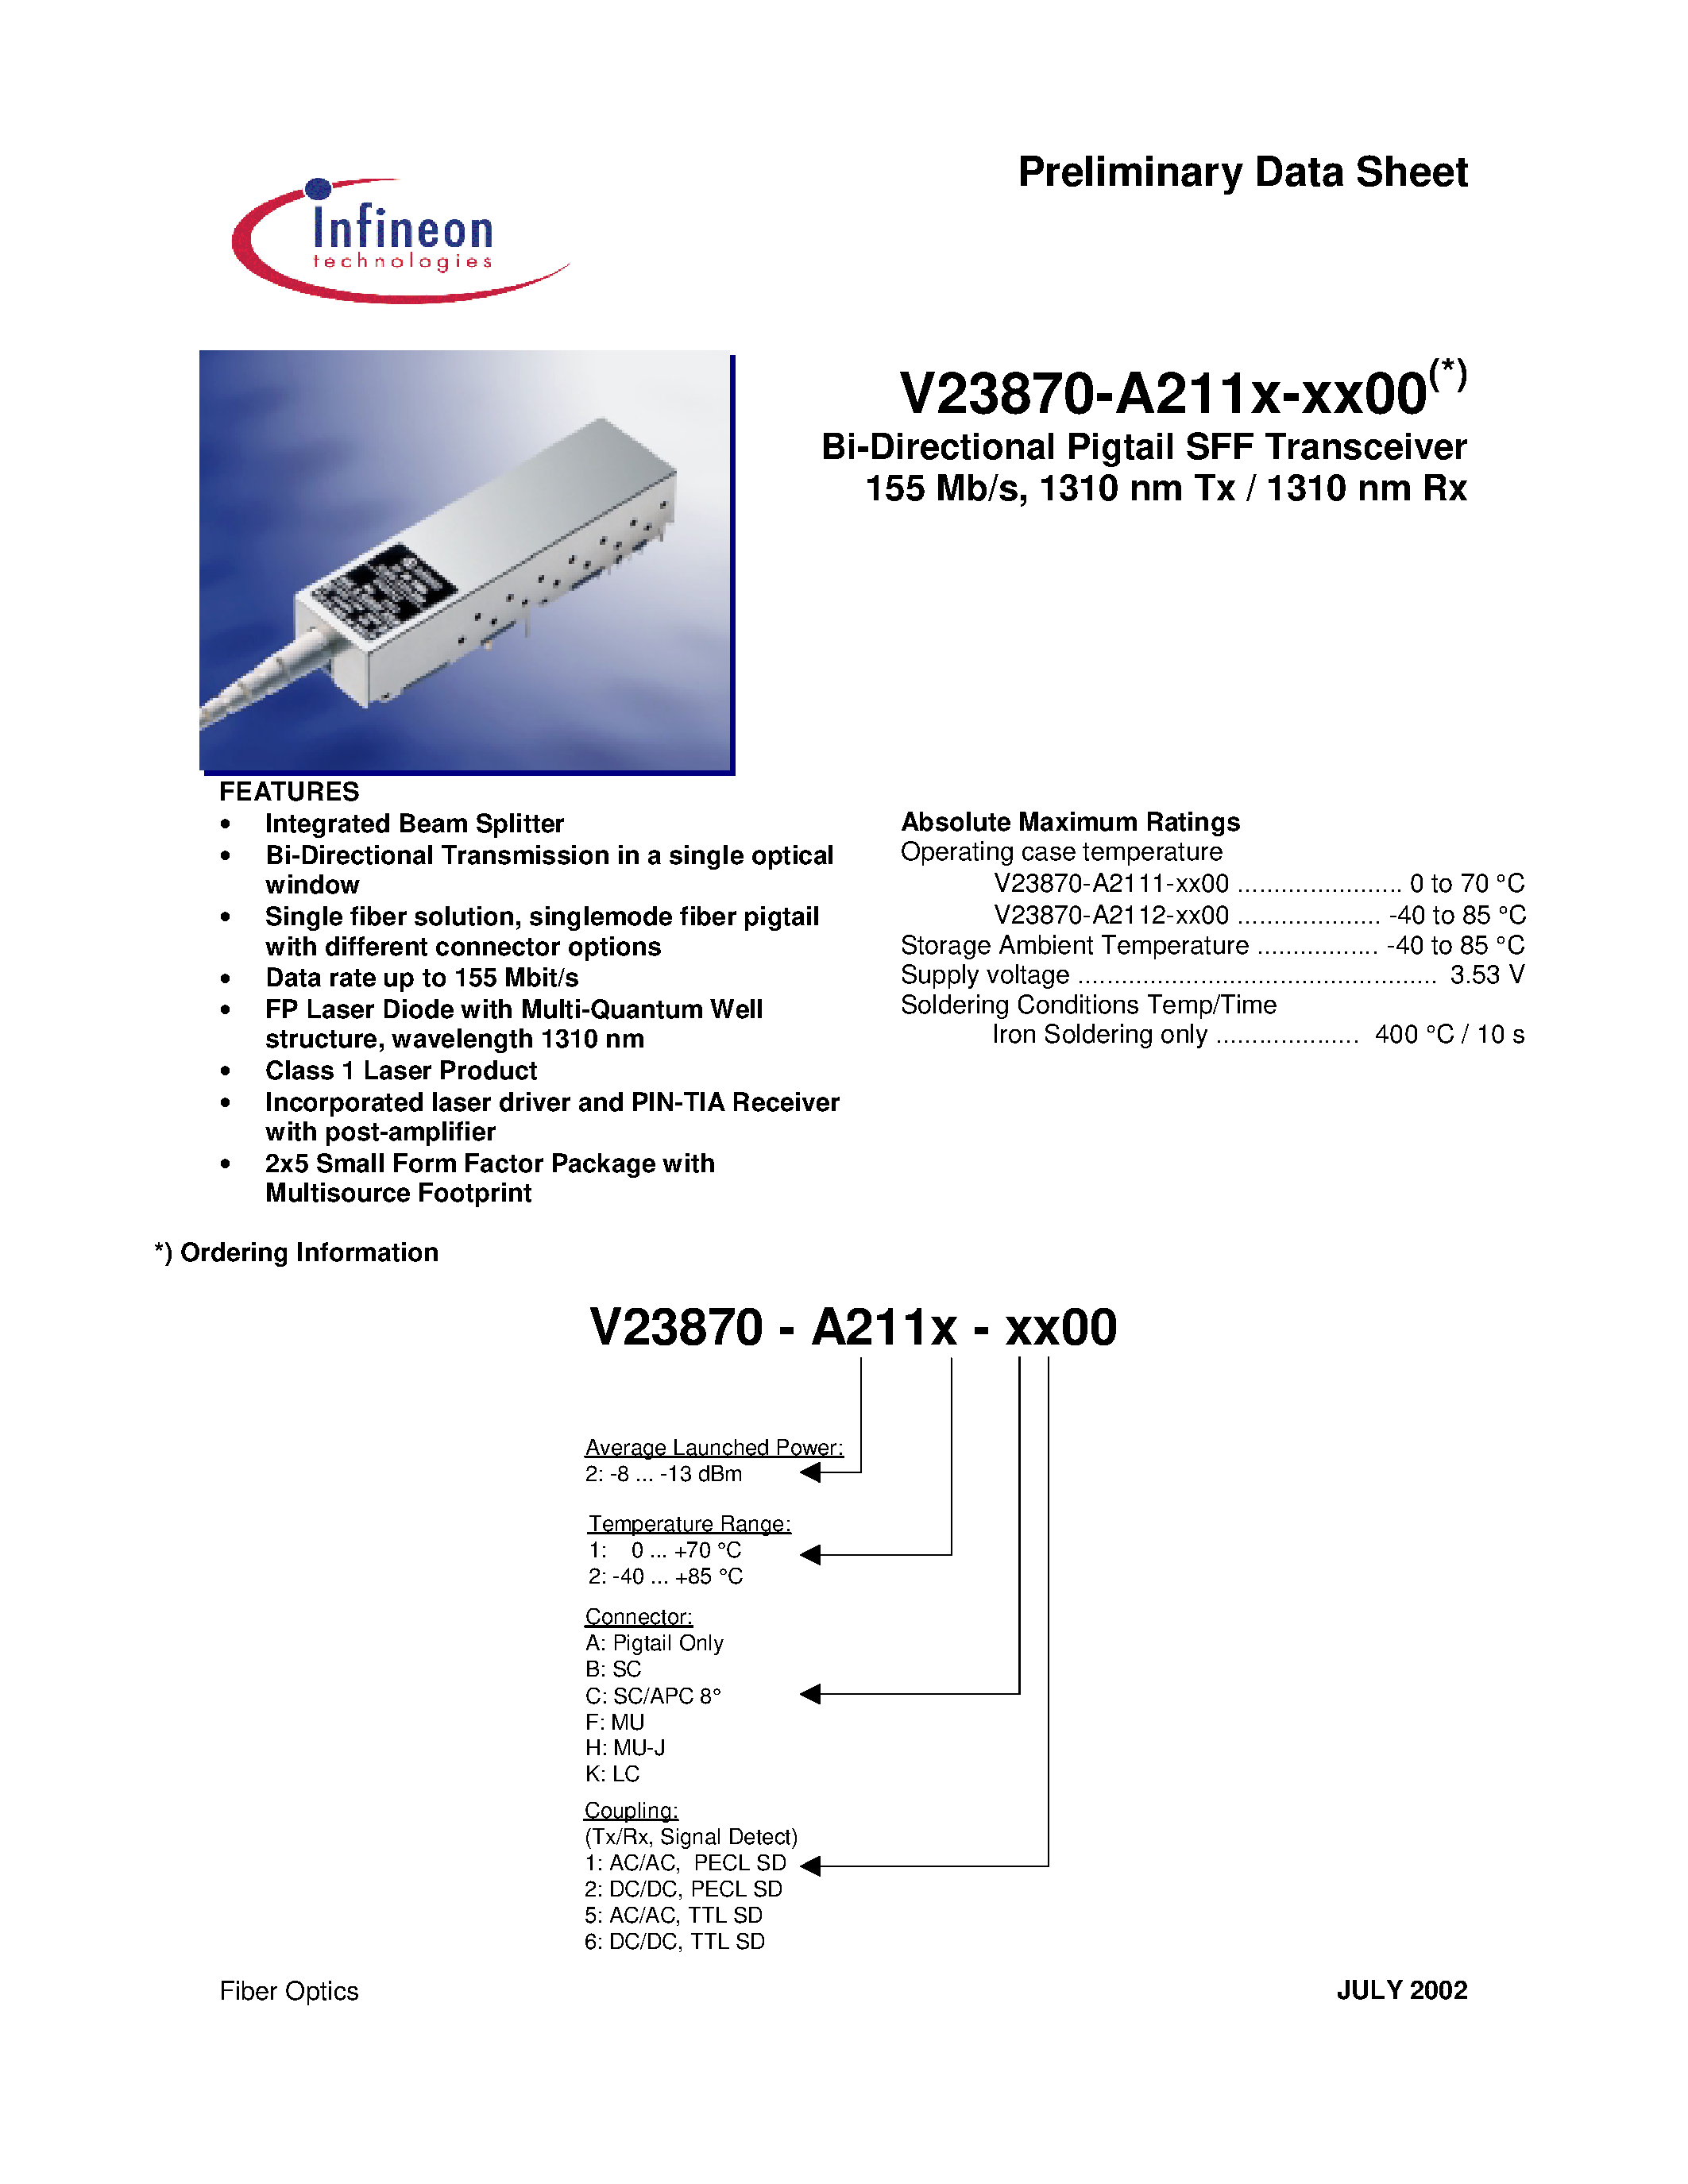 Даташит V23870-A2111-B600 - Bi-Directional Pigtail SFF Transceiver 155 Mb/s/ 1310 nm Tx / 1310 nm Rx страница 1